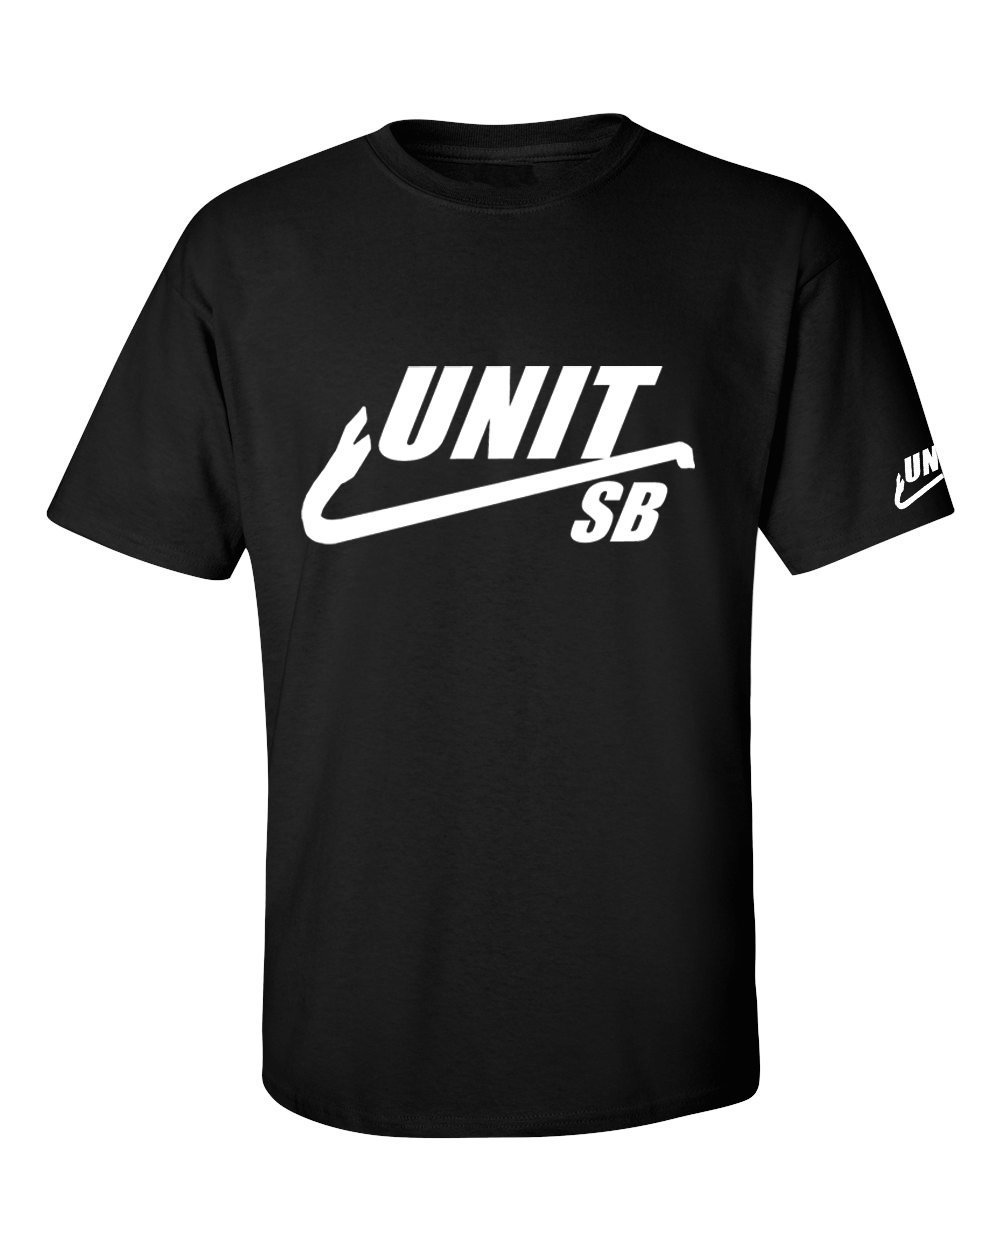 unitsb-t-shirt-black